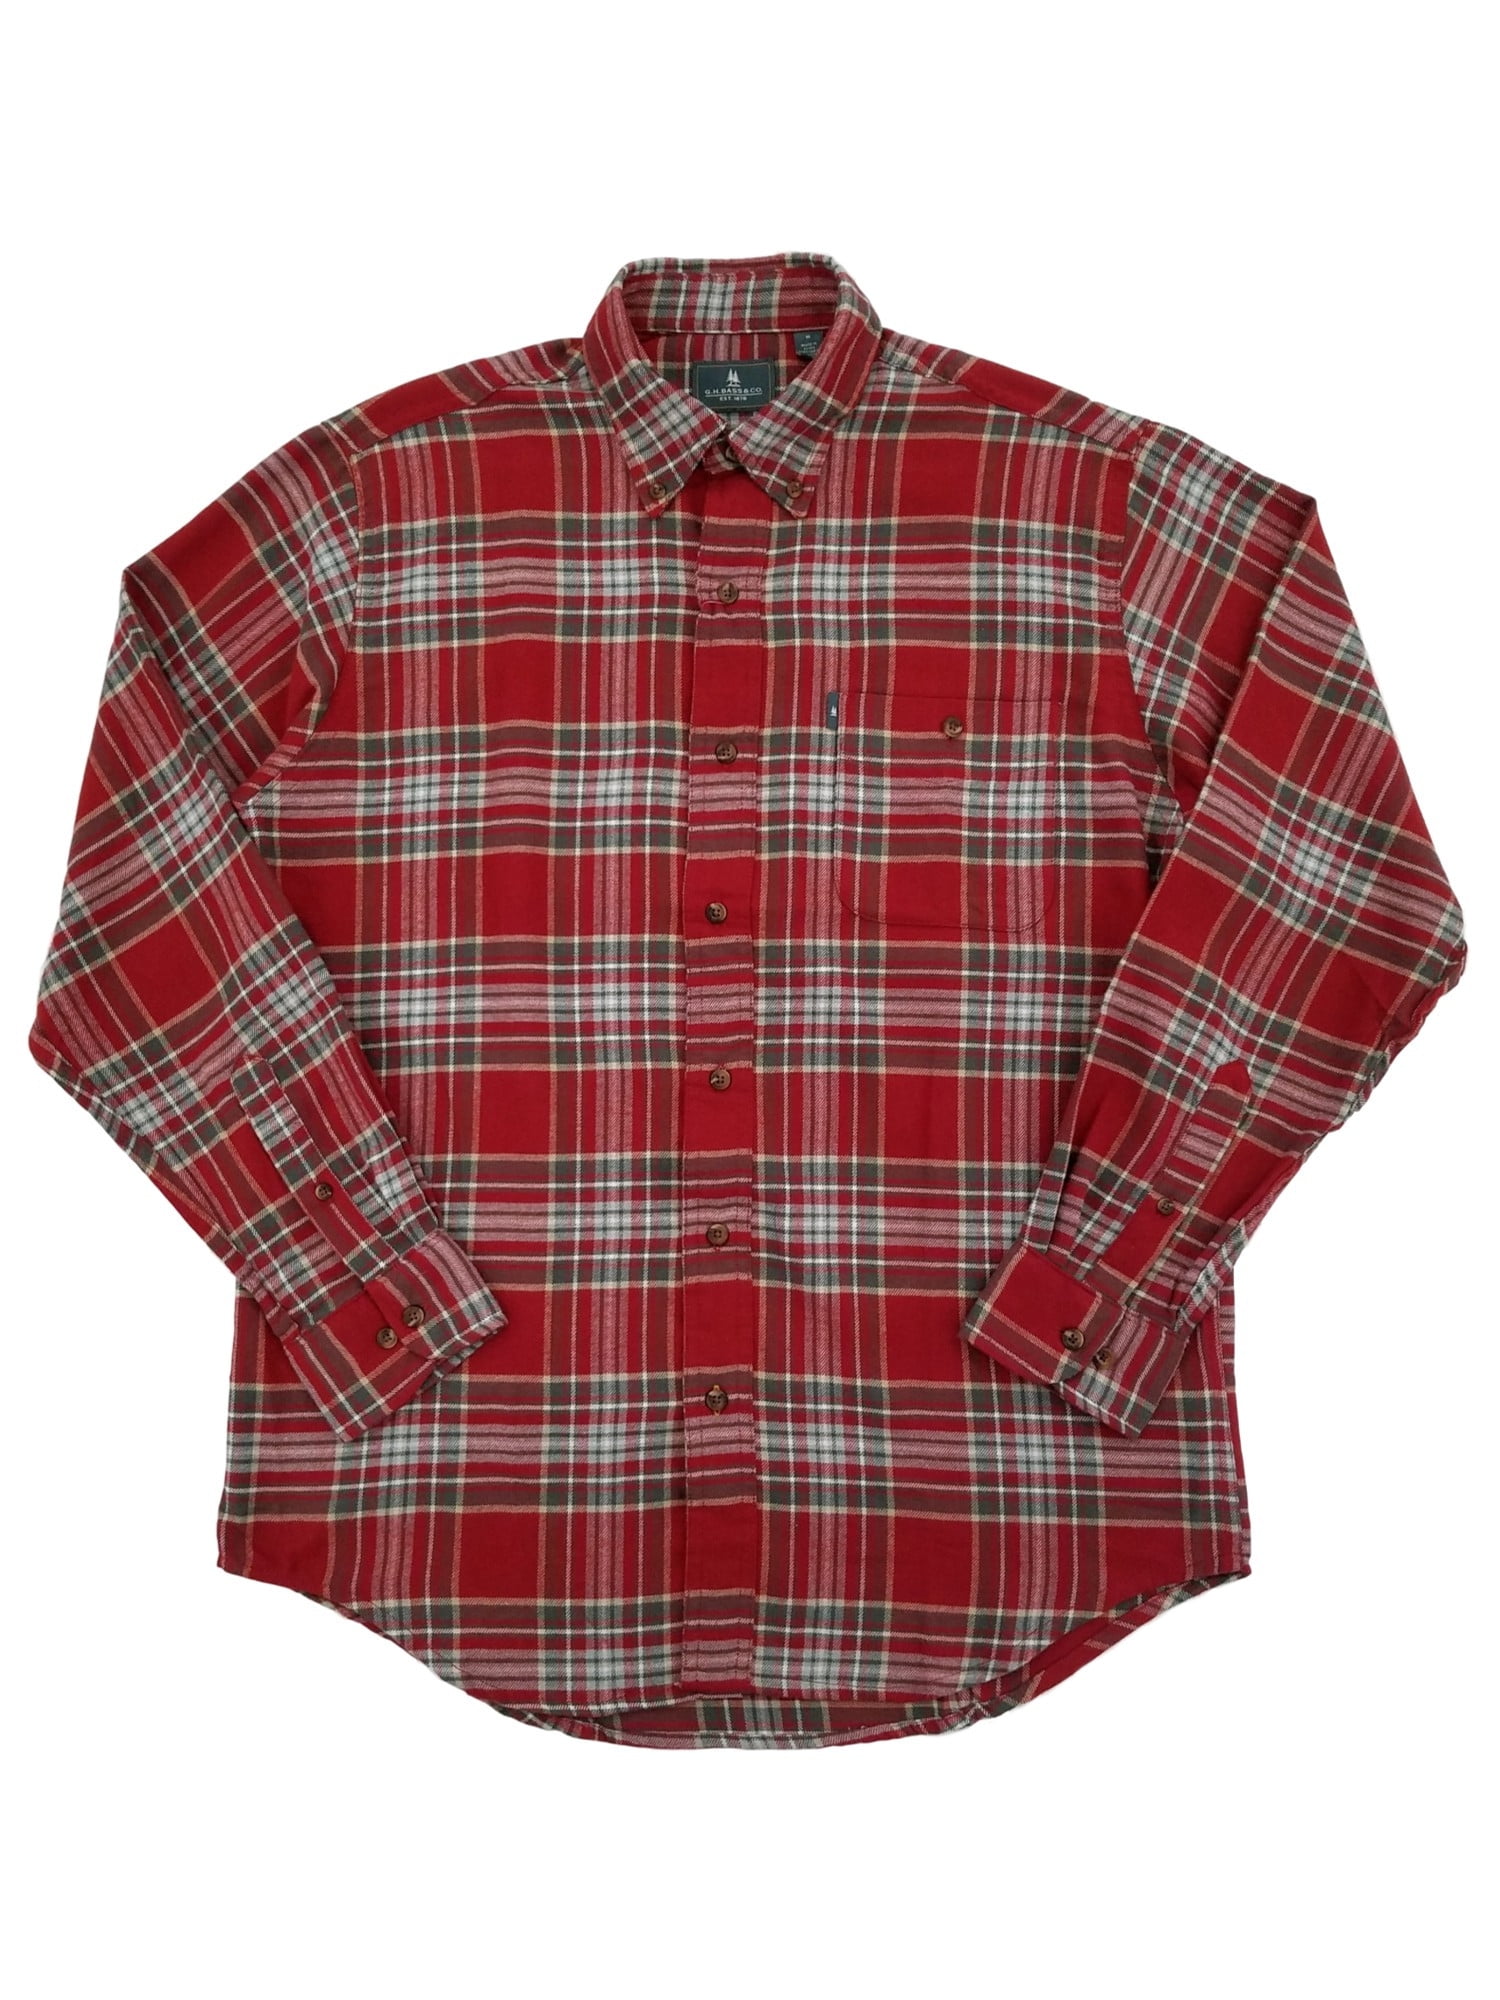 HiLY Mens Cotton Plaid Shirts Long Sleeve Button Down Shirt Regular Fit 3 Colors 